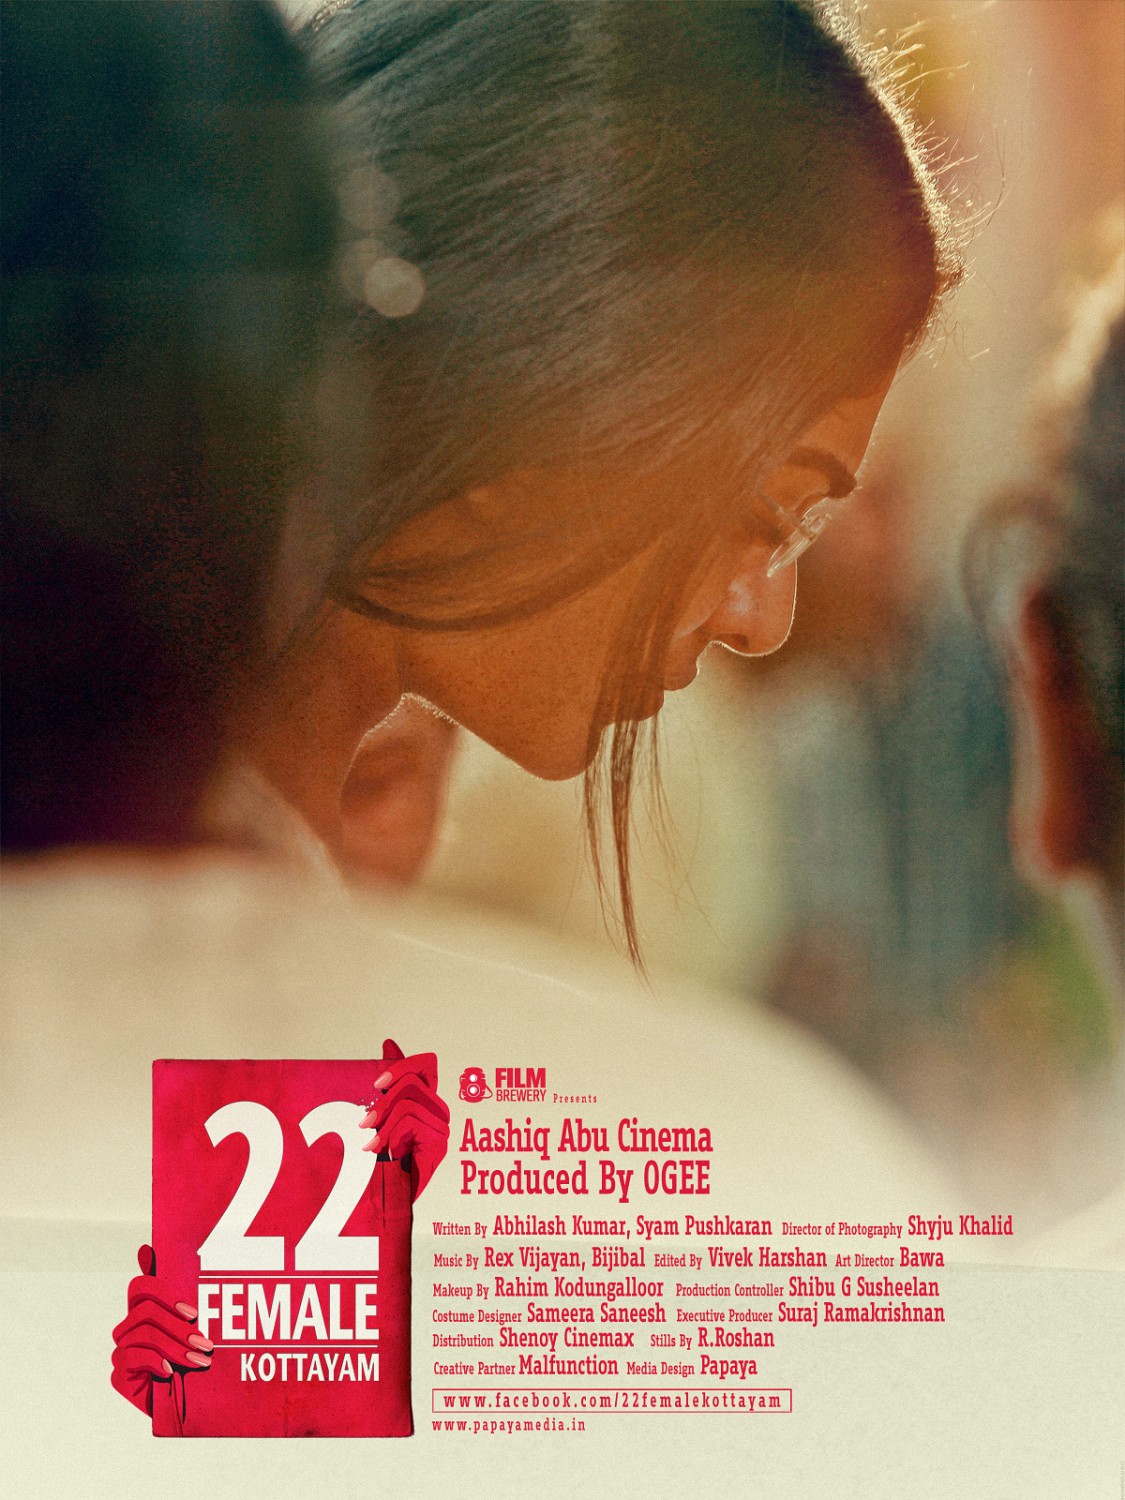 Extra Large Movie Poster Image for 22 Female Kottayam (#2 of 28)